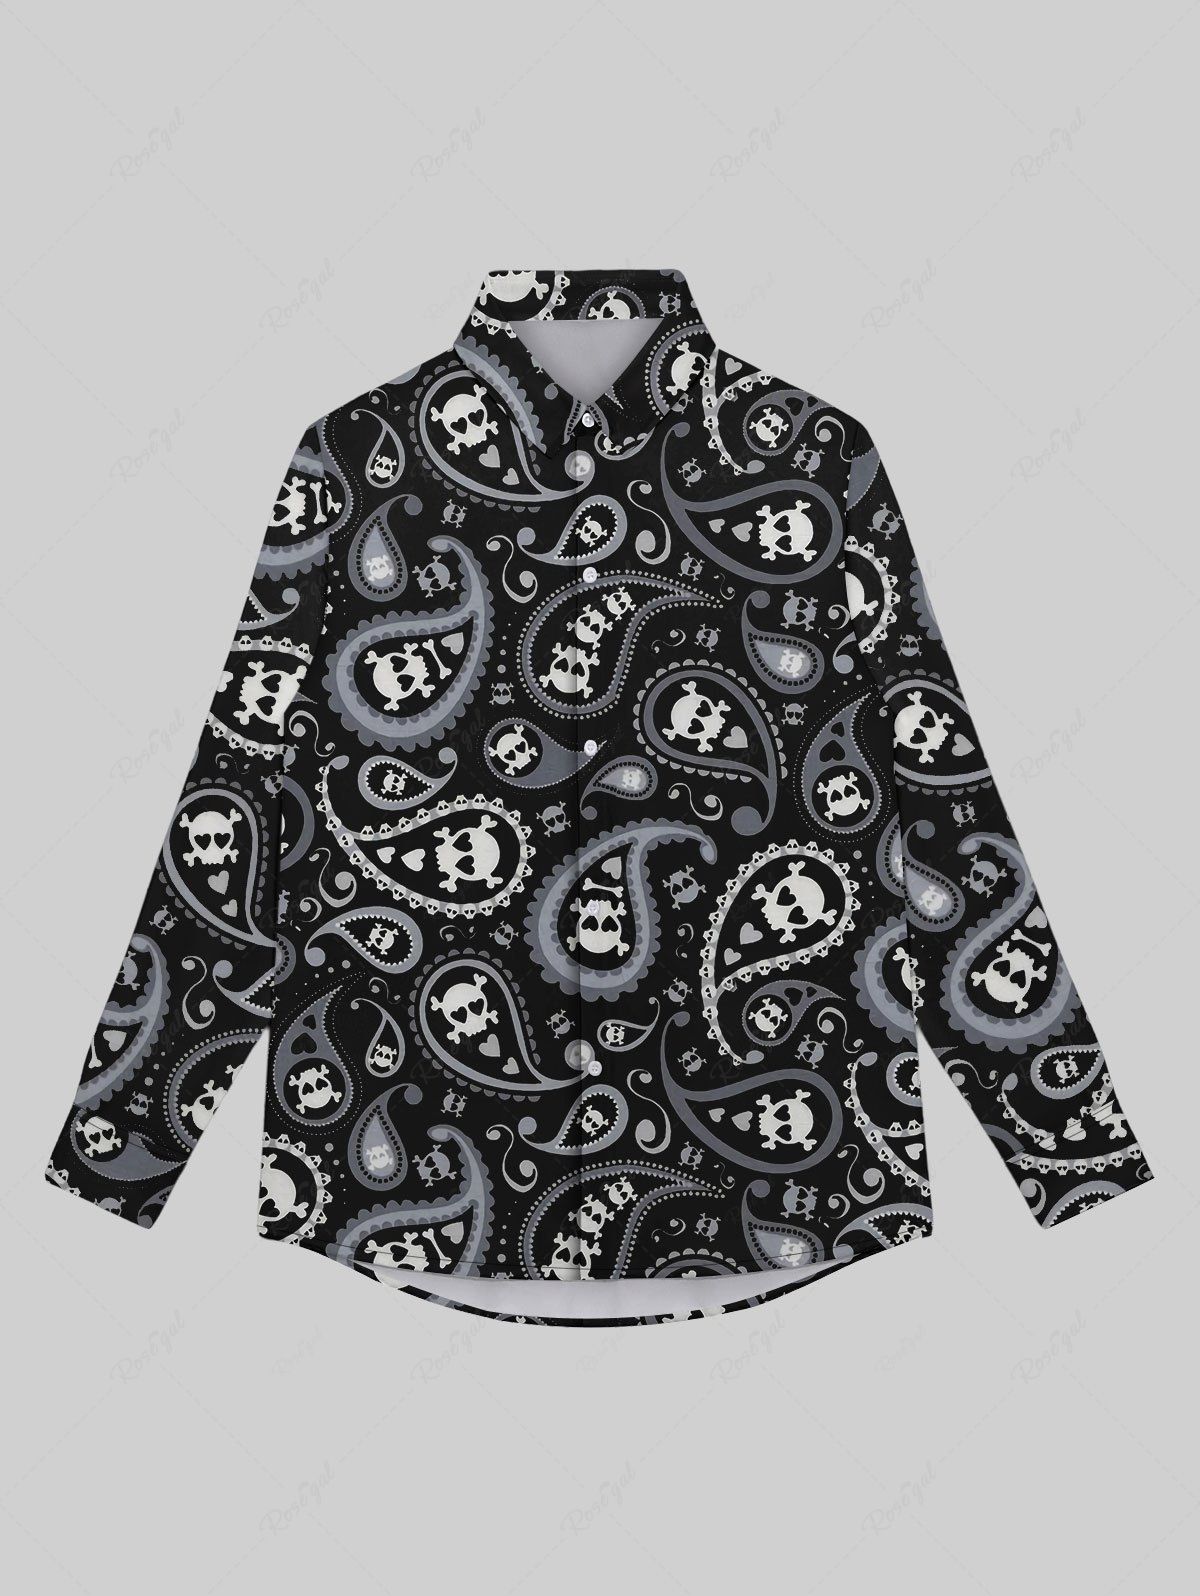 Store Gothic Turn-down Collar Paisley Skulls Heart Bone Print Buttons Shirt For Men  